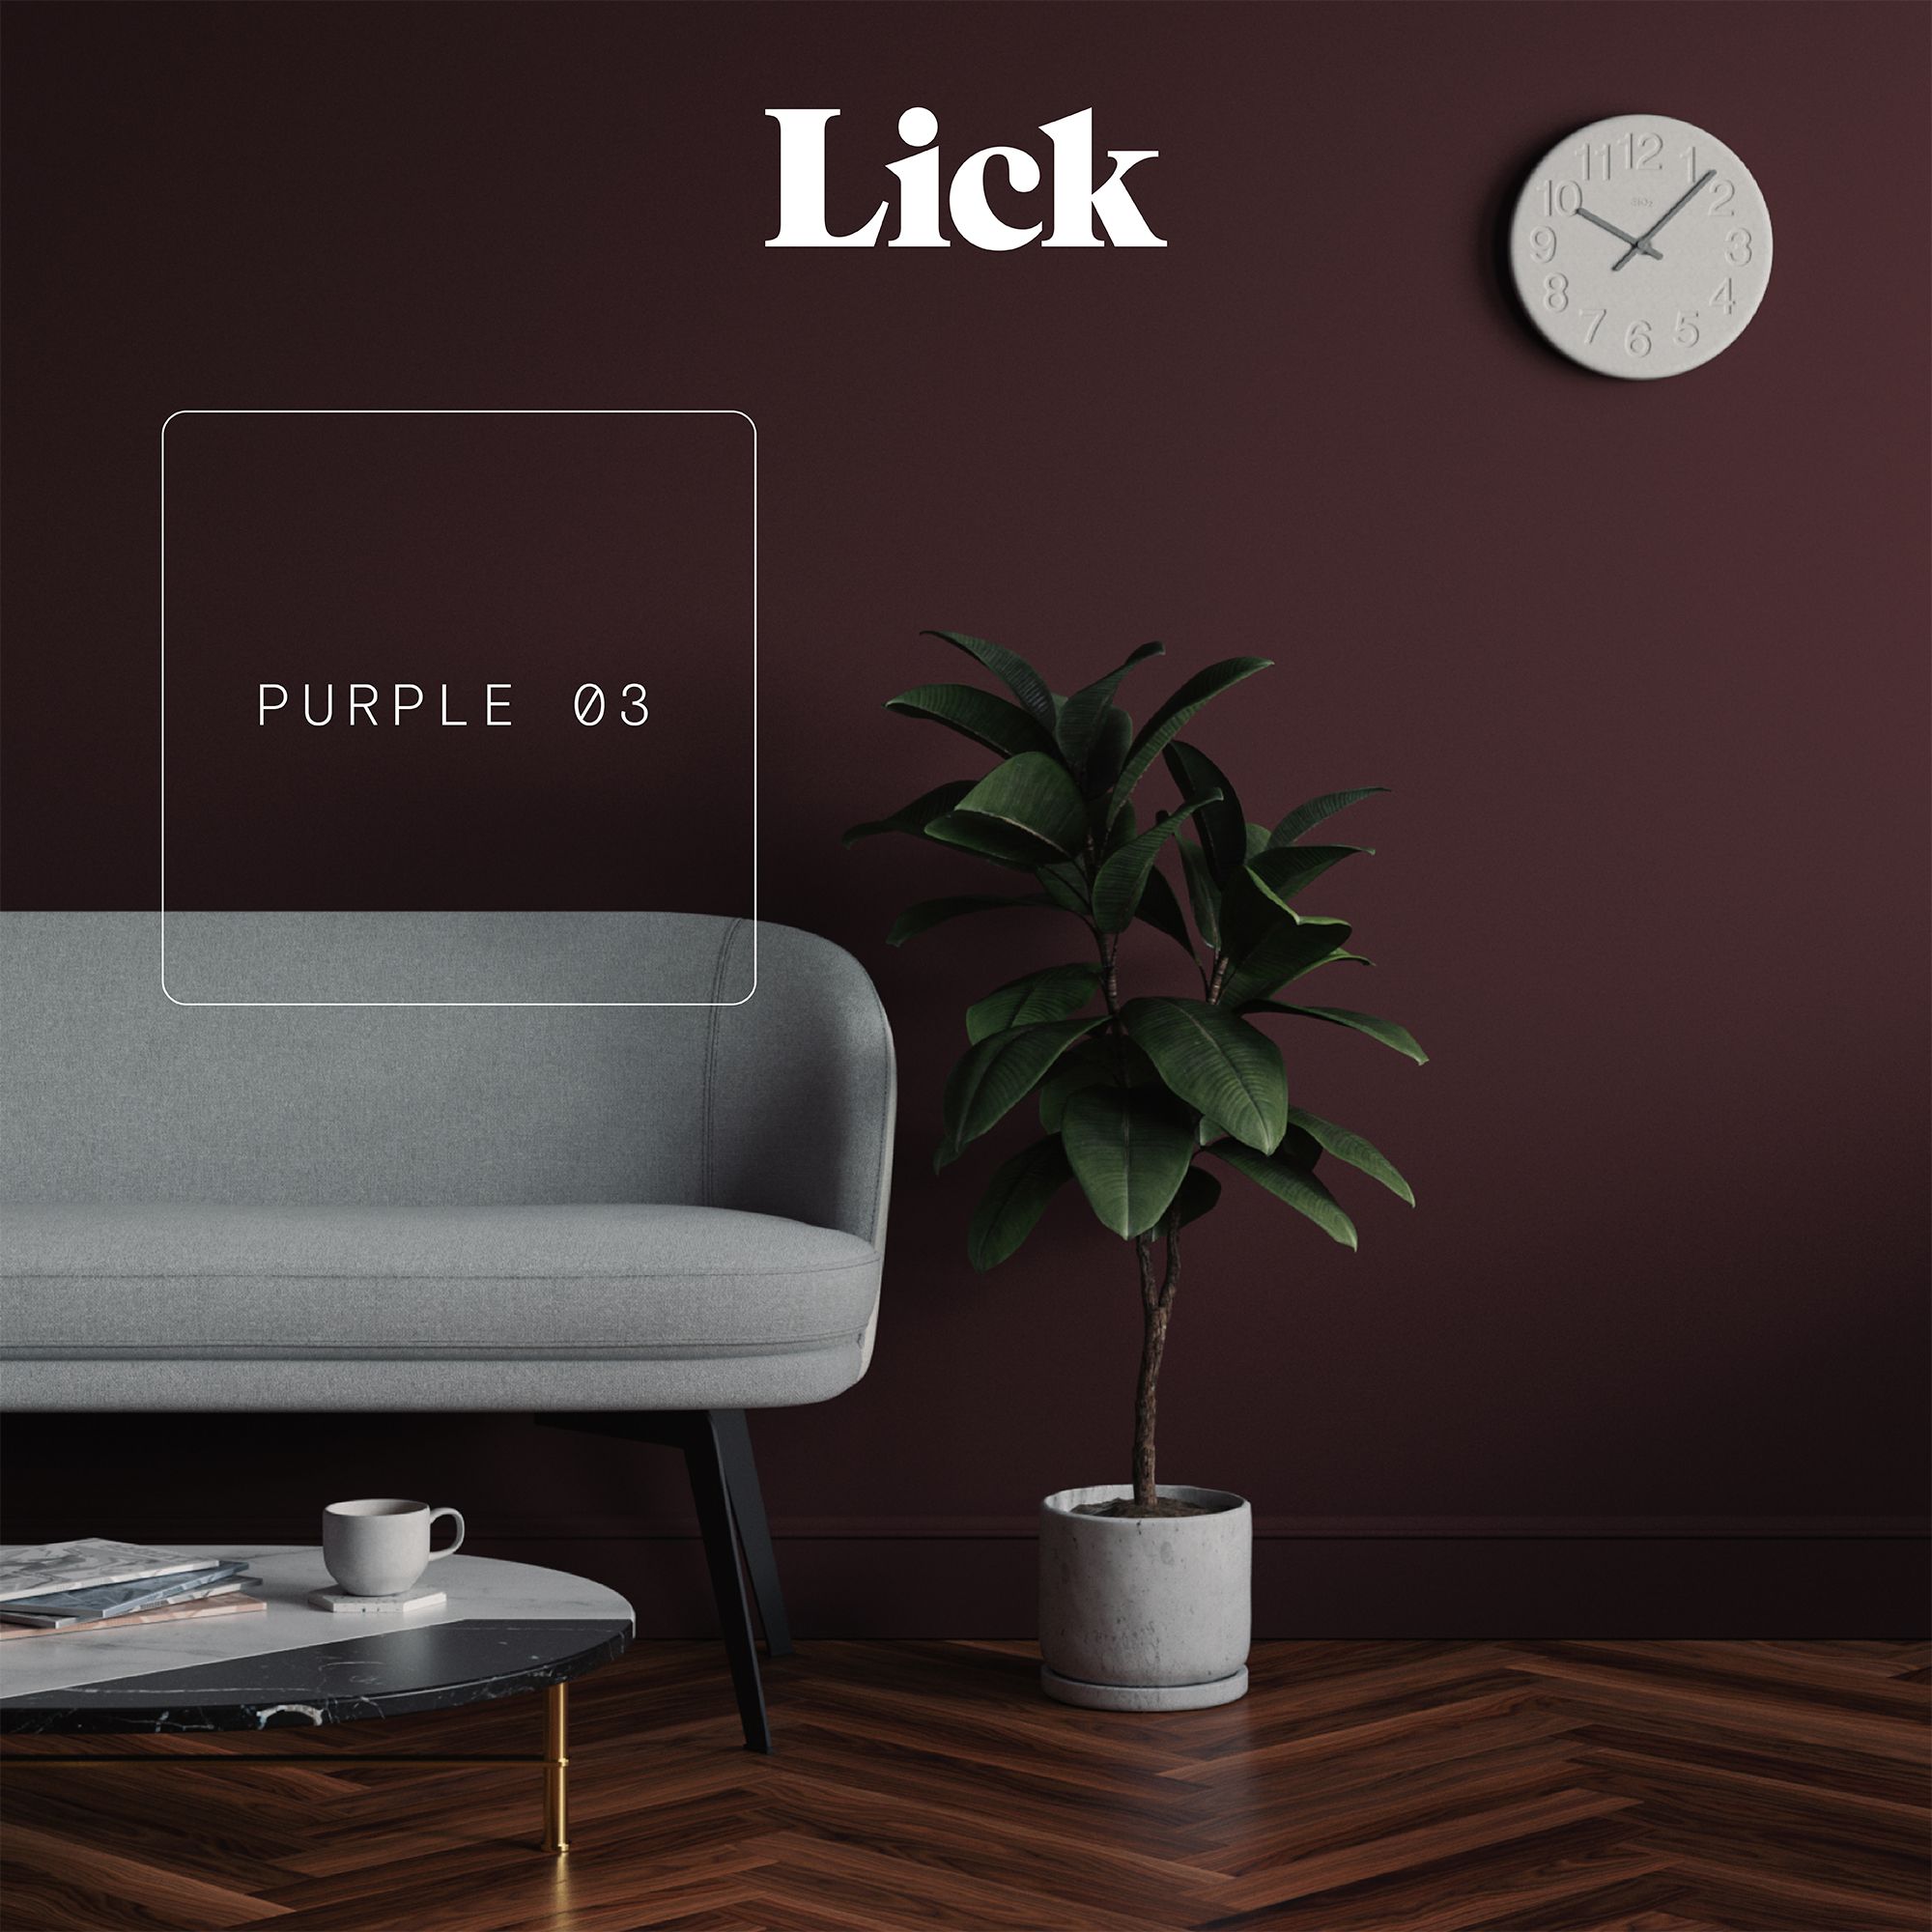 Lick Purple 03 Matt Emulsion paint, 2.5L